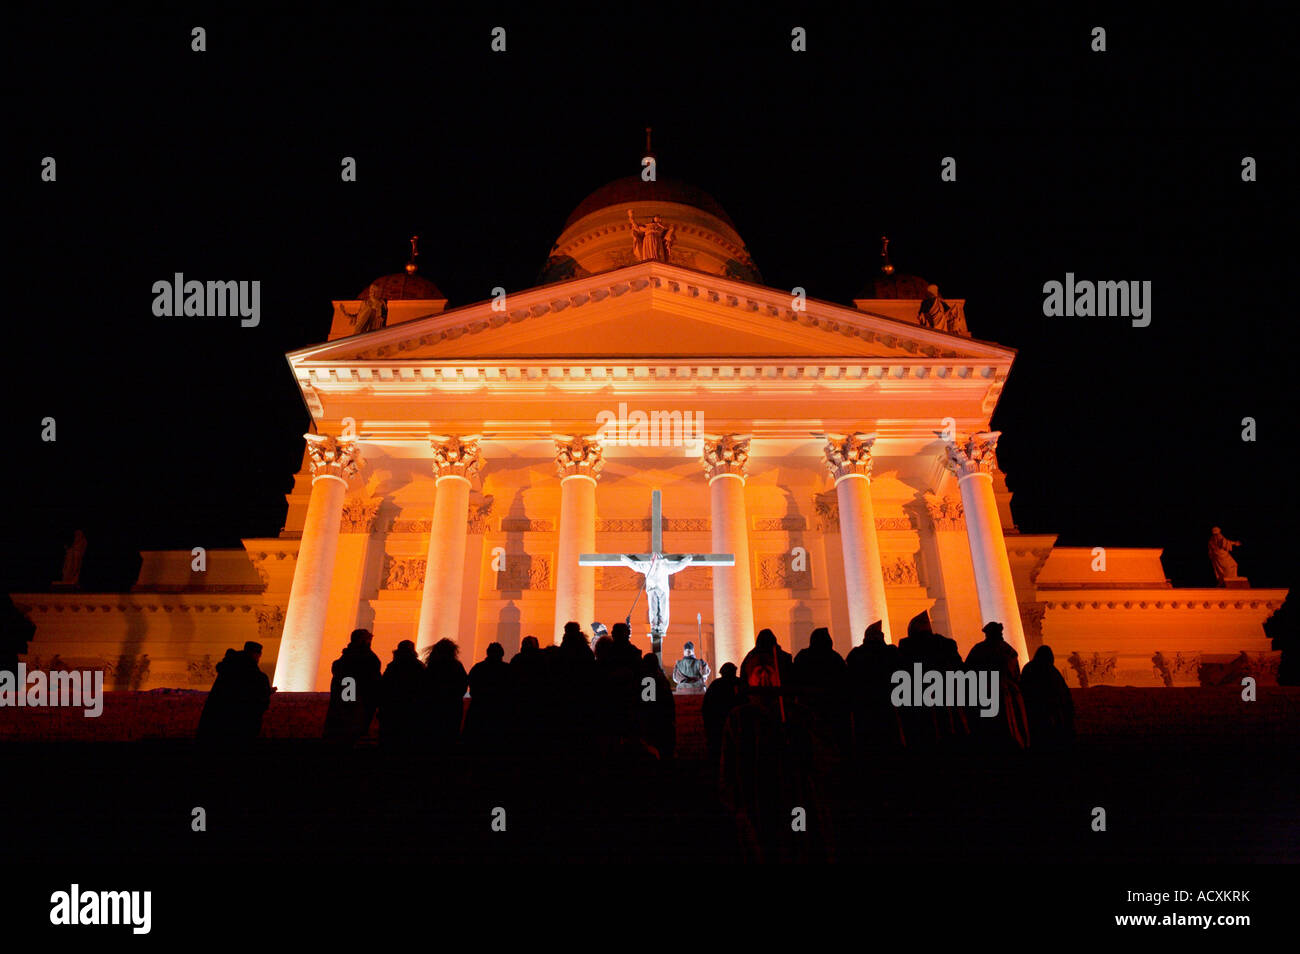 Ecumenical Passion Play, Via Crucis - Way of the Cross, Helsinki Cathedral, Senate Square, Helsinki, Finland Stock Photo